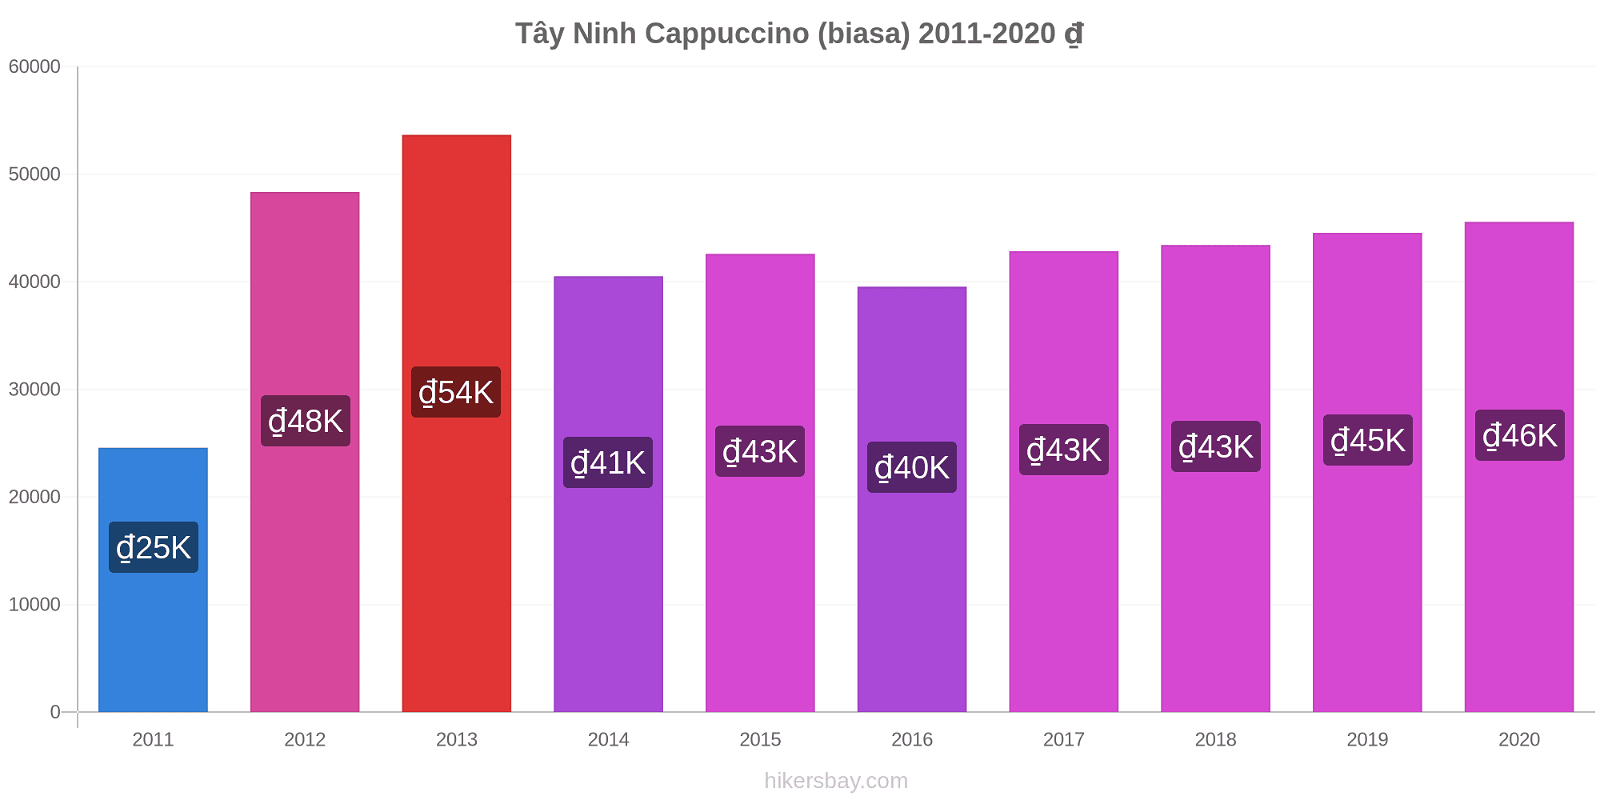 Tây Ninh perubahan harga Cappuccino (biasa) hikersbay.com